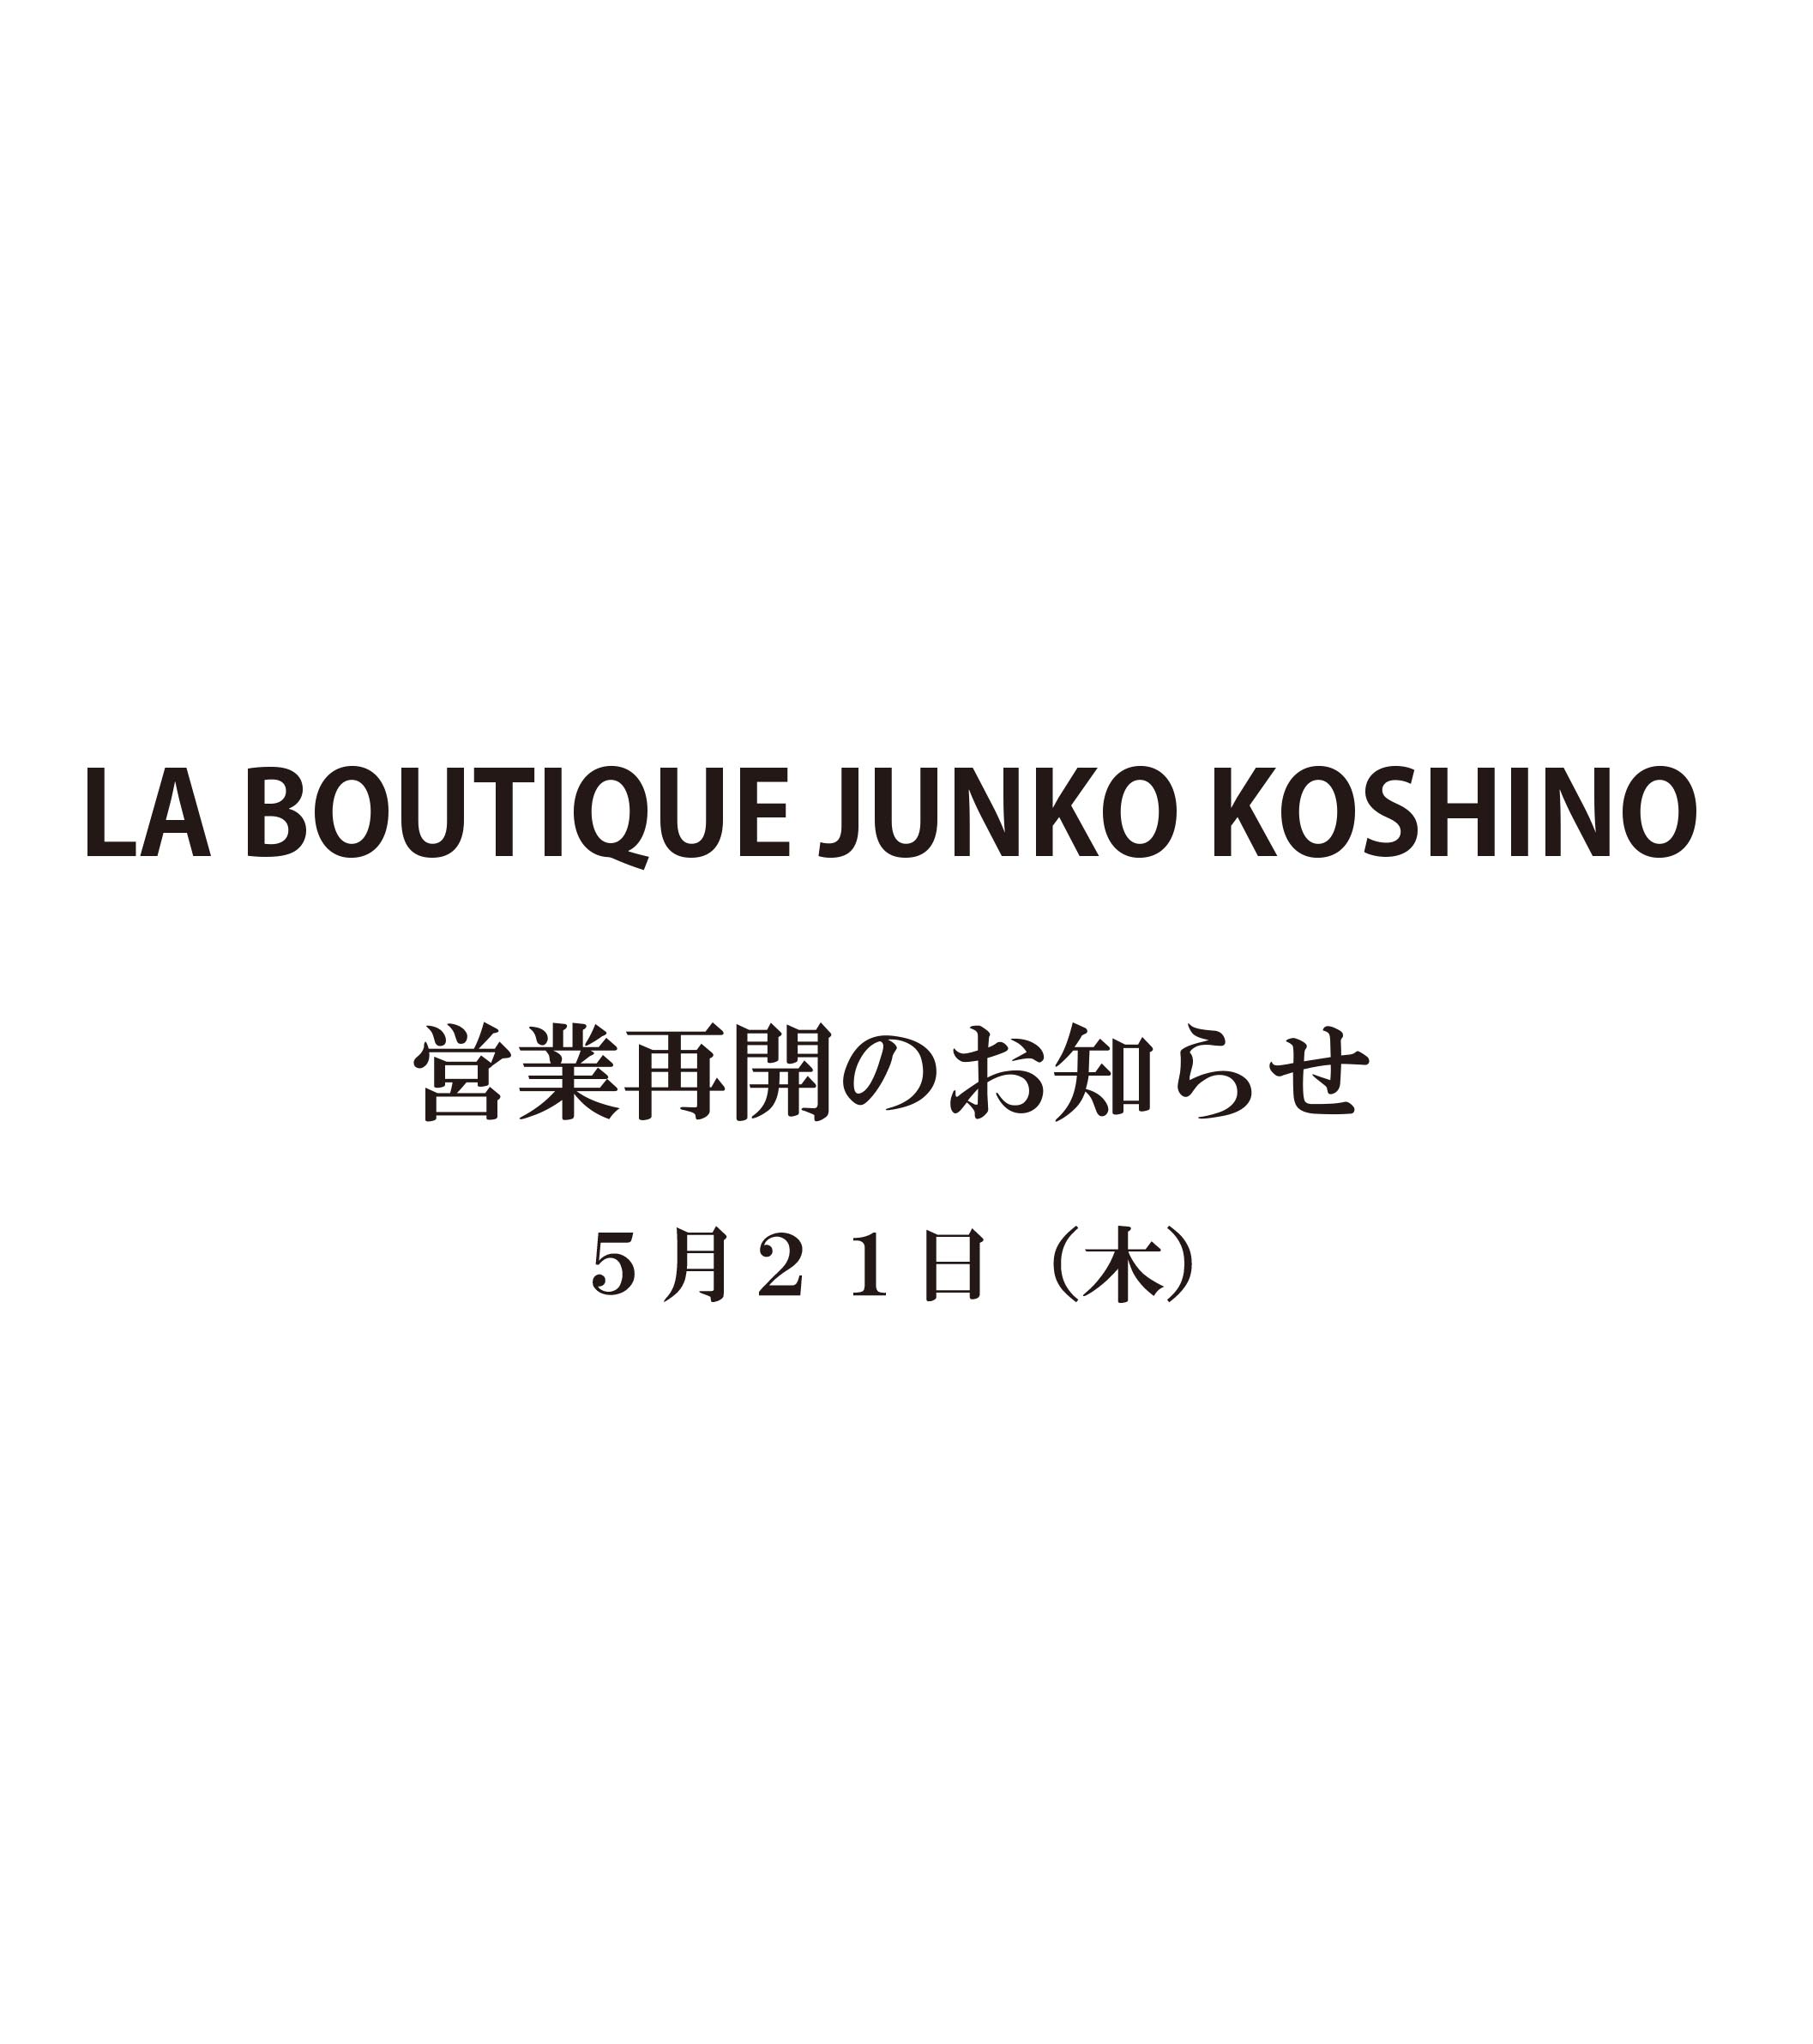 JUNKO KOSHINO初のNFTアートコレクションを発表